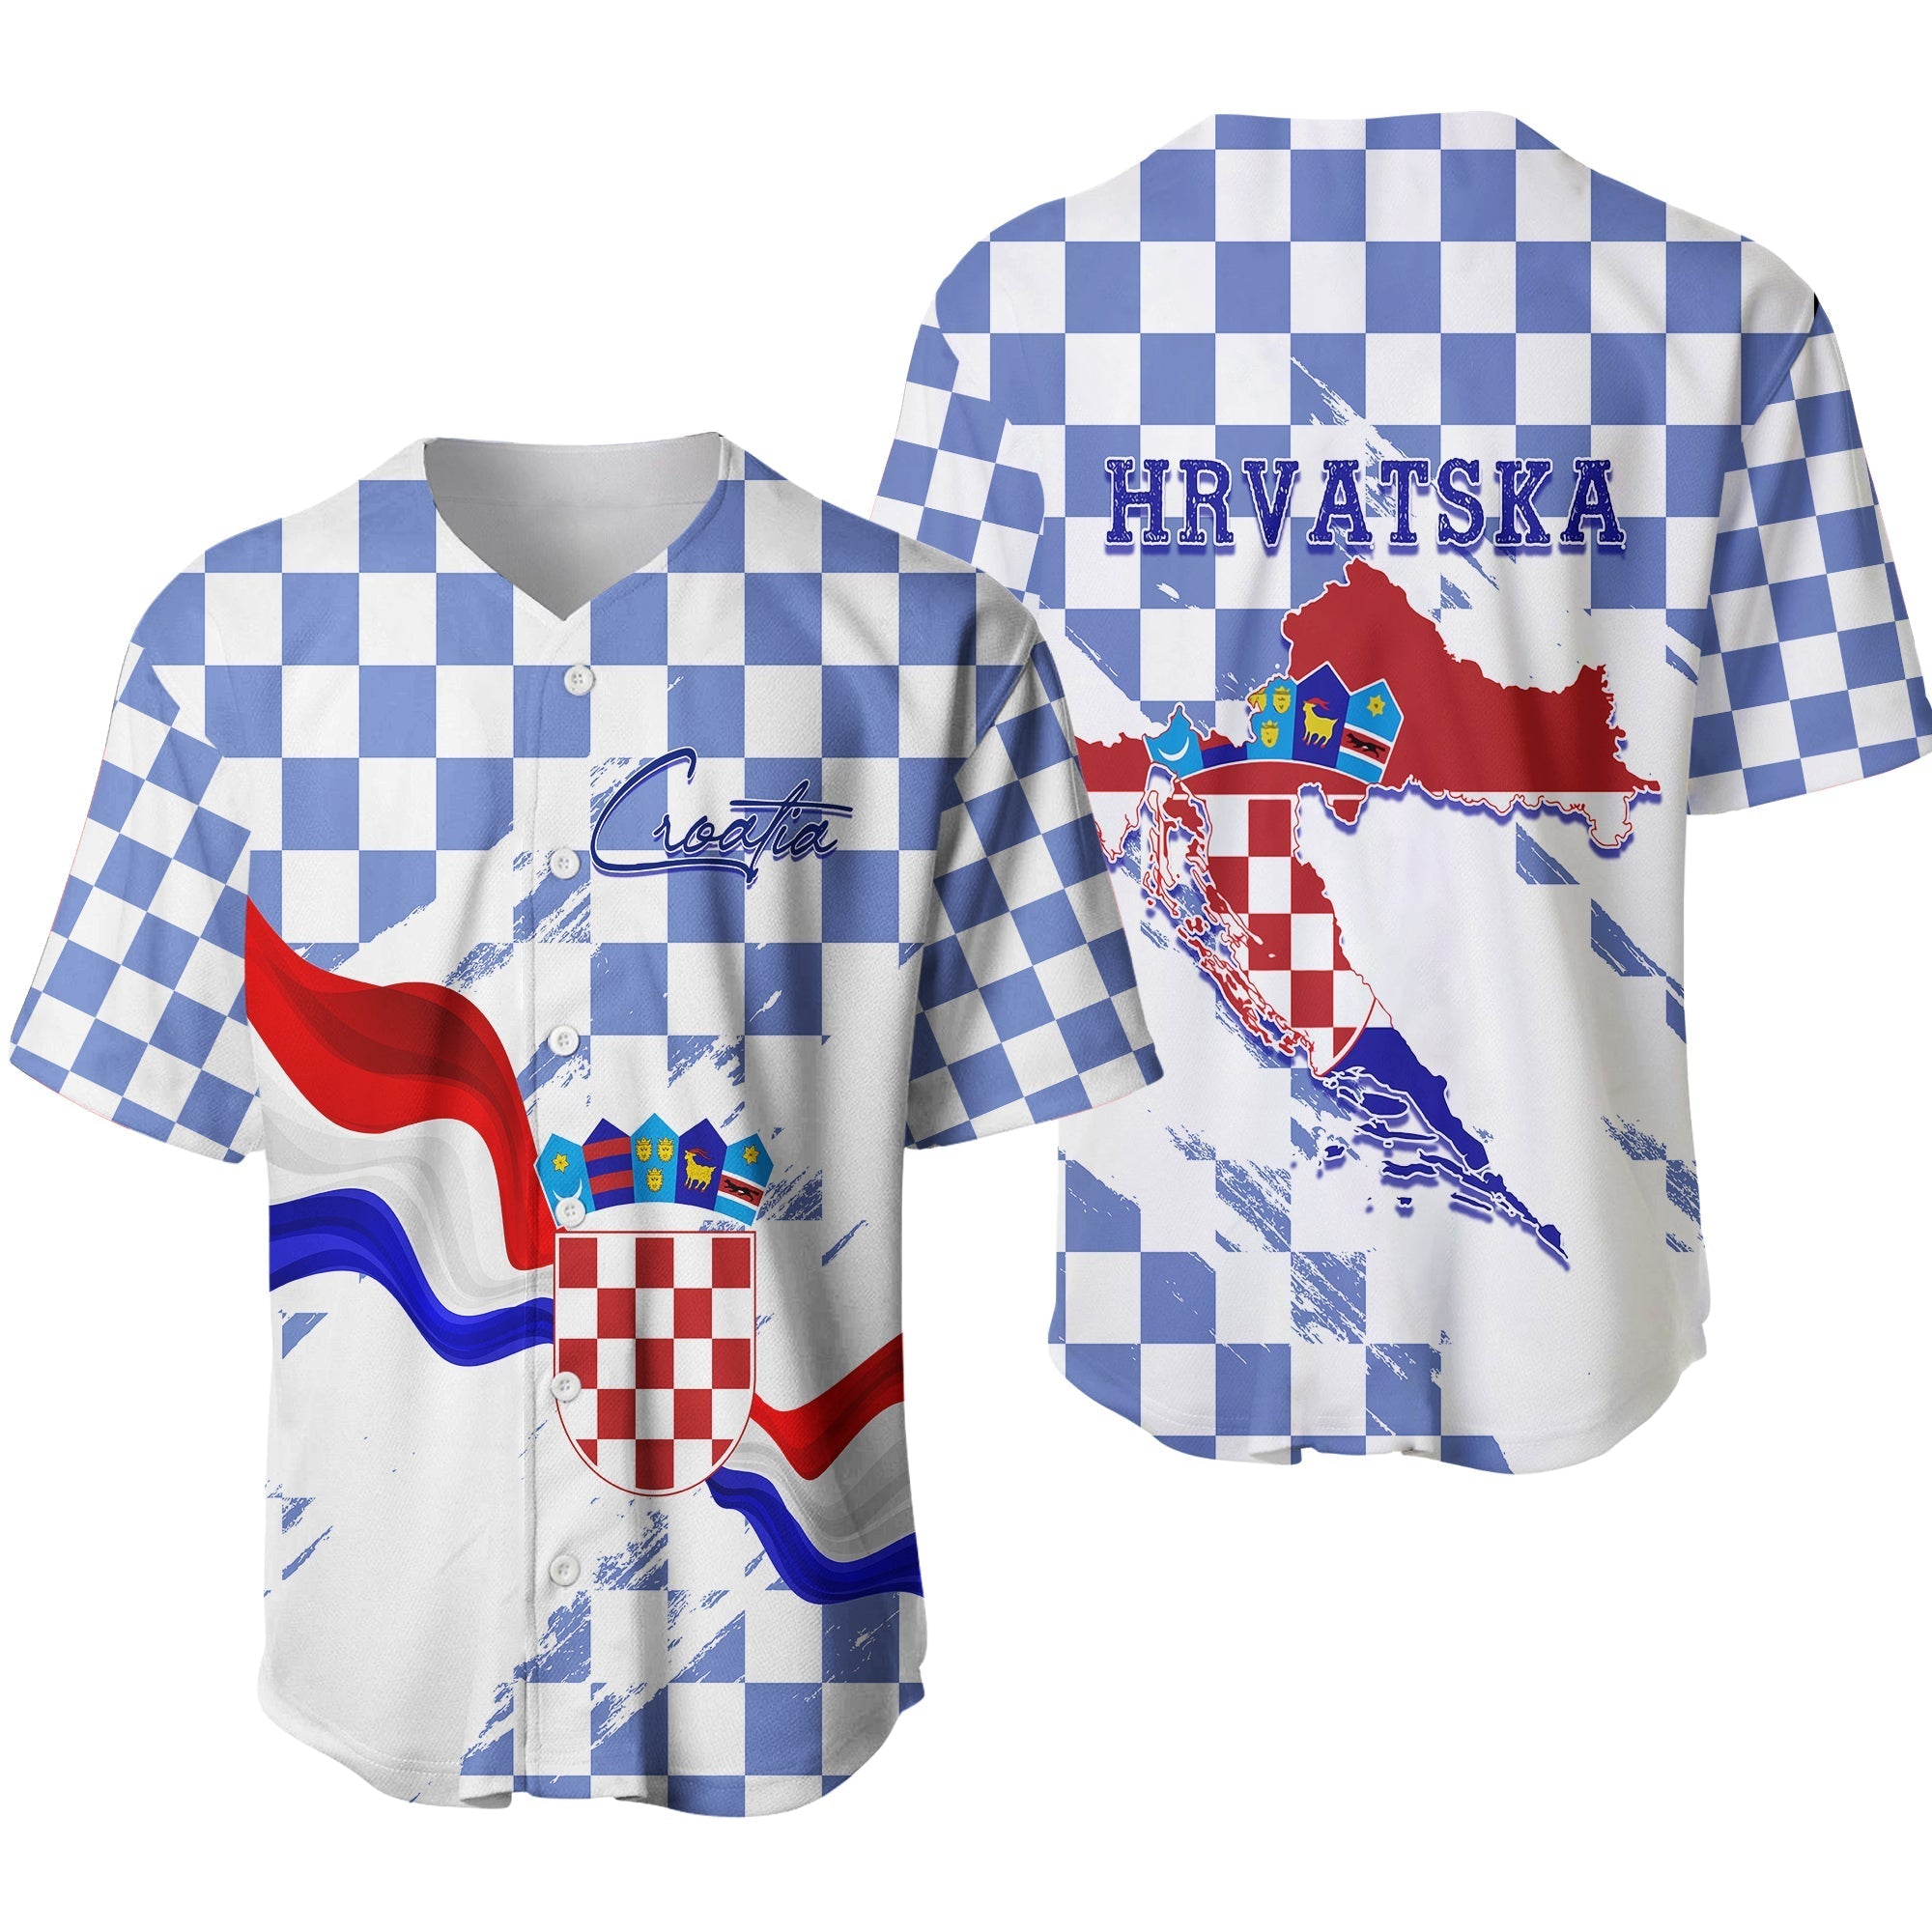 croatia-baseball-jersey-checkerboard-grunge-style-blue-color